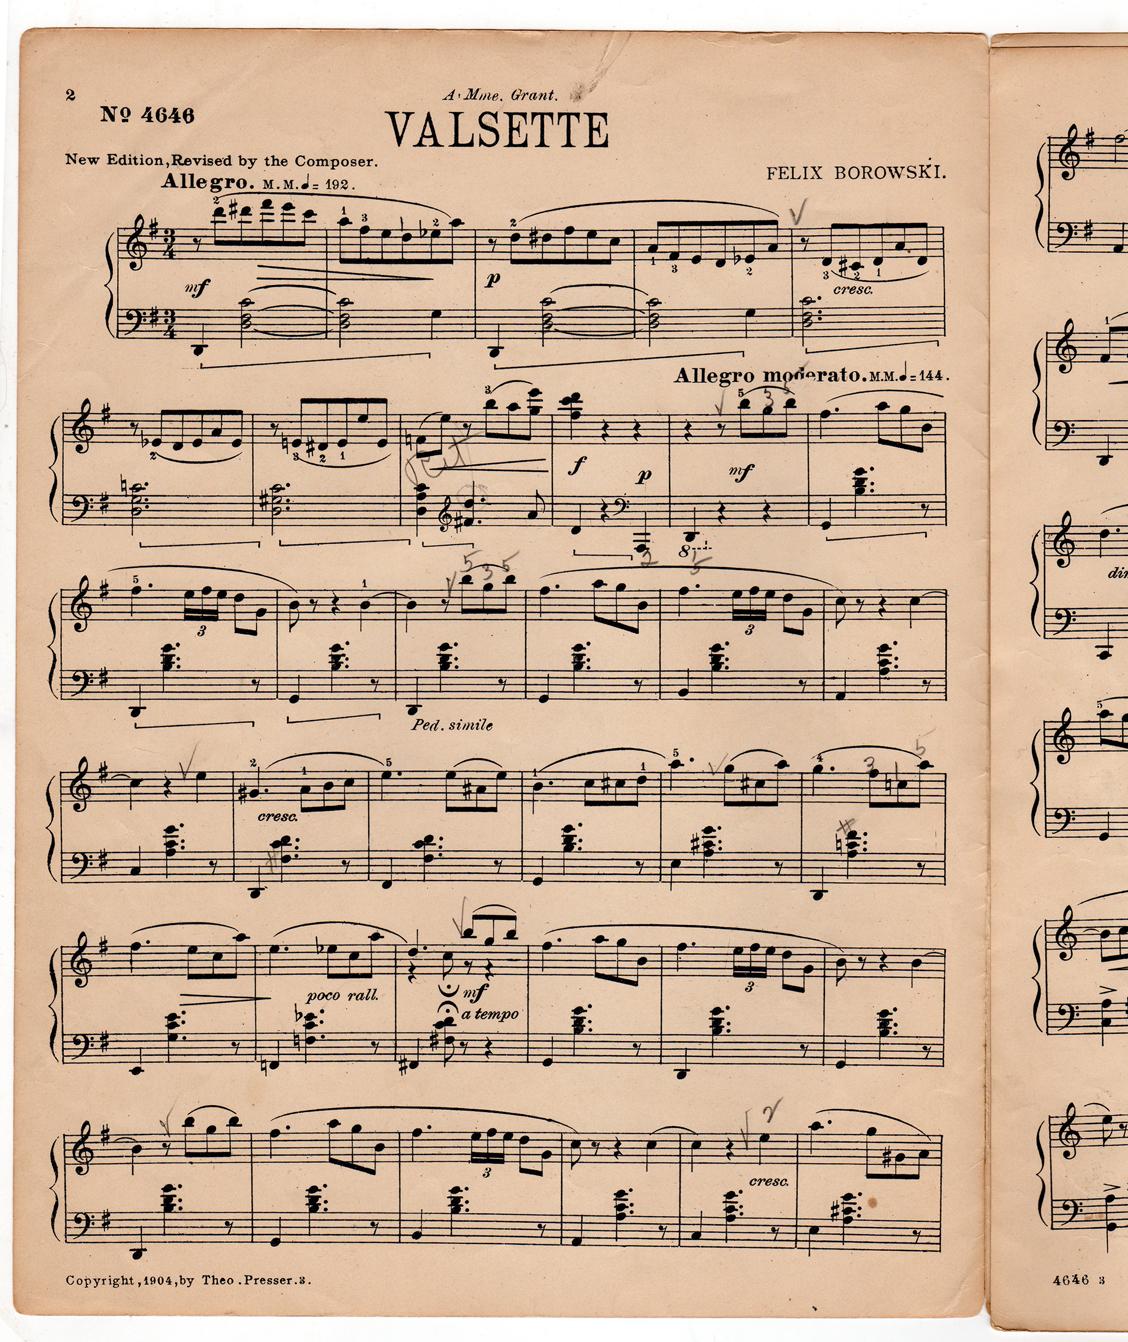 Valsette. Vintage Felix Borowski Sheet Music, 1904, Piano Composition